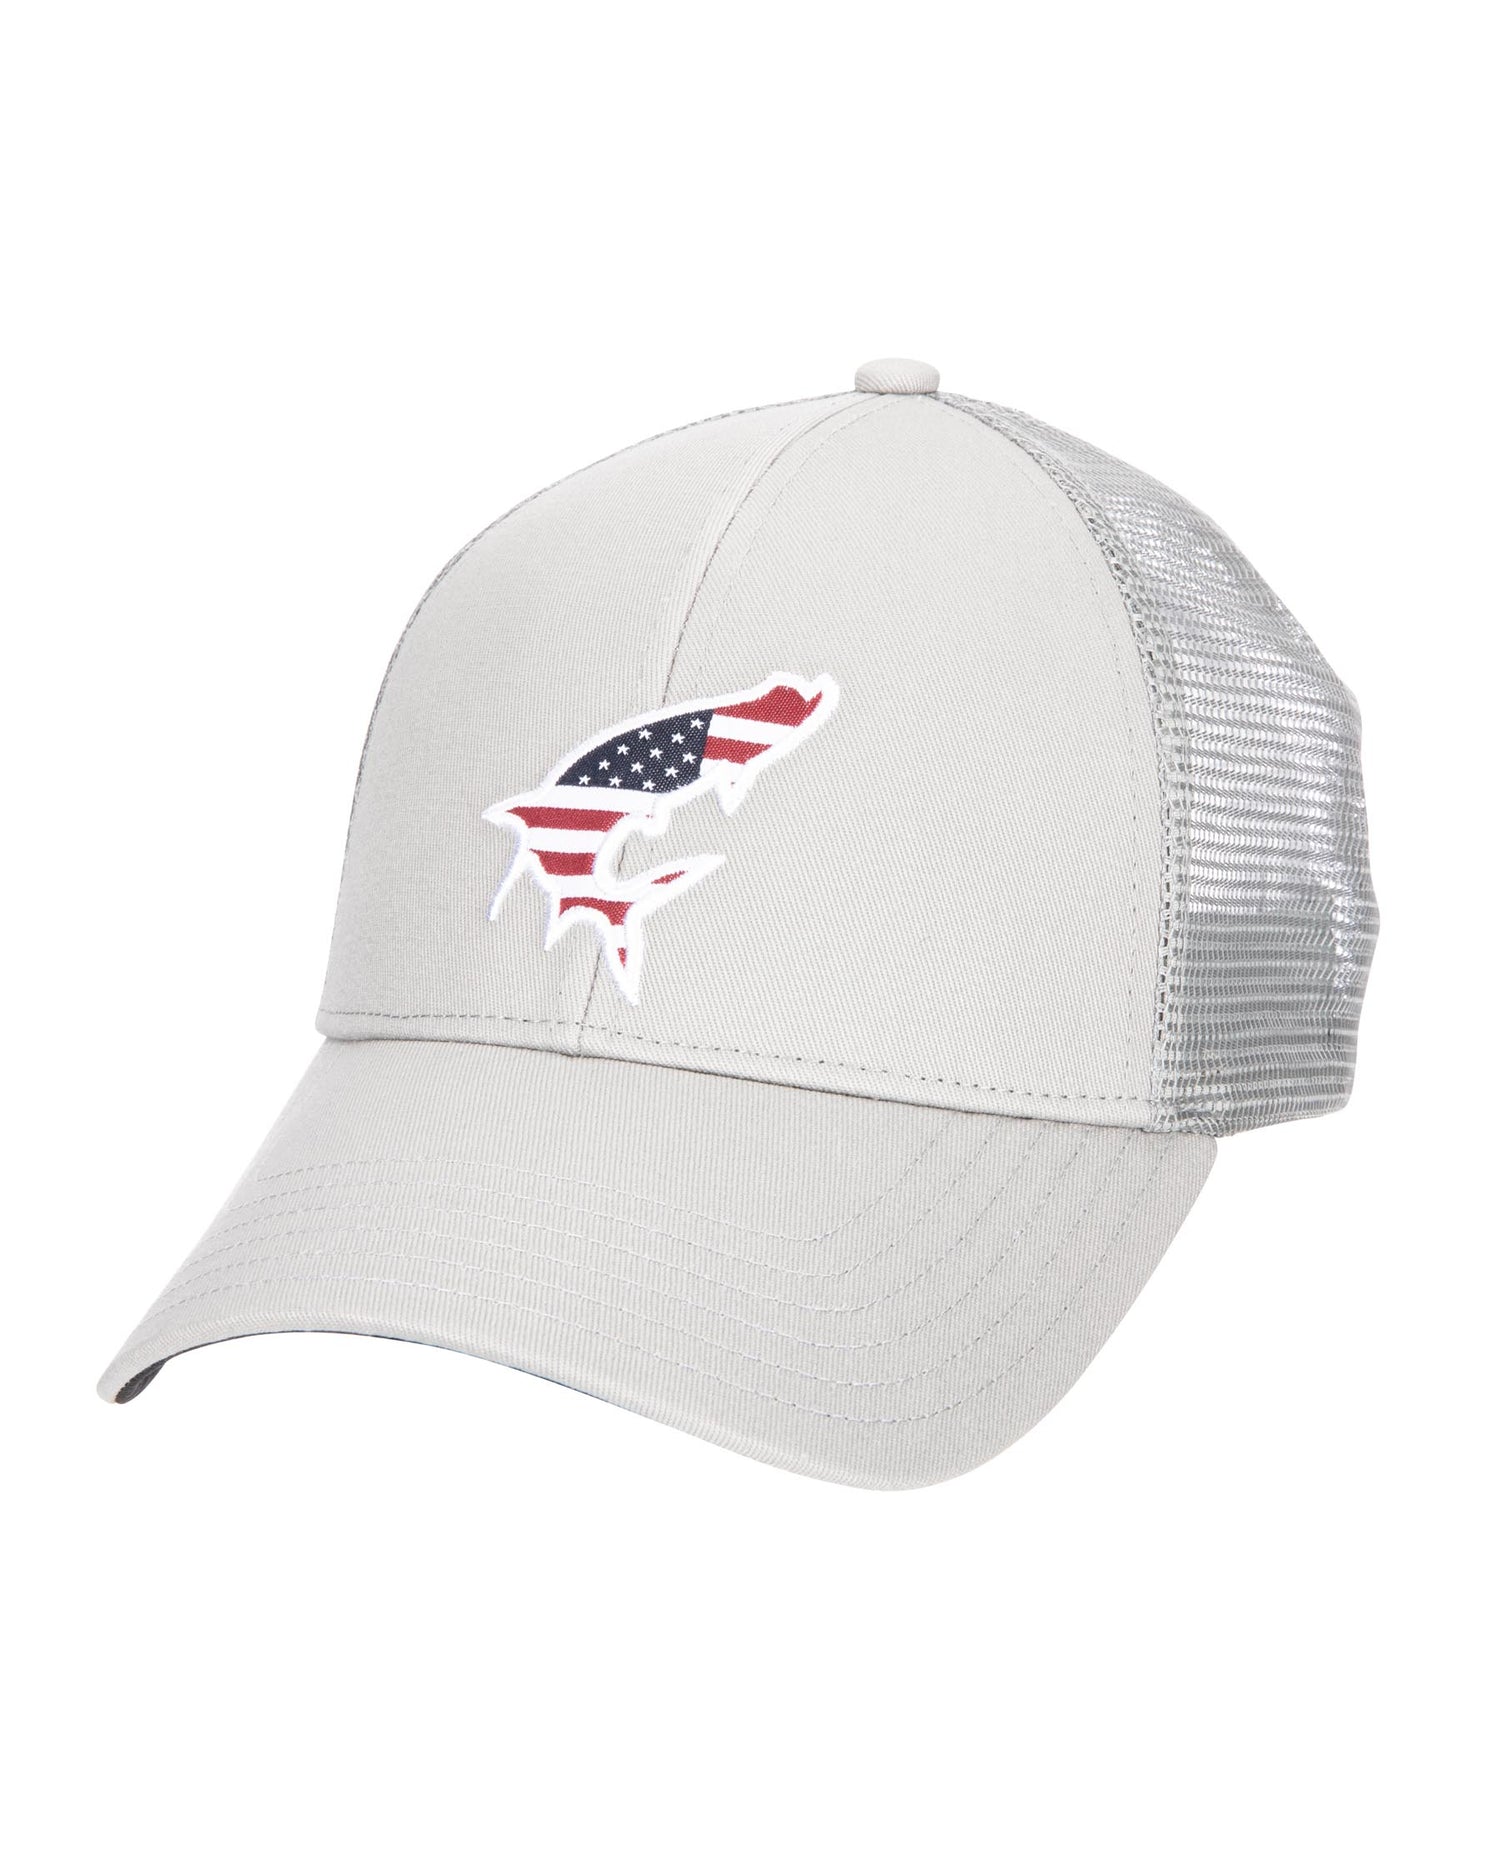 USA Catch Trucker Hat - Sterling